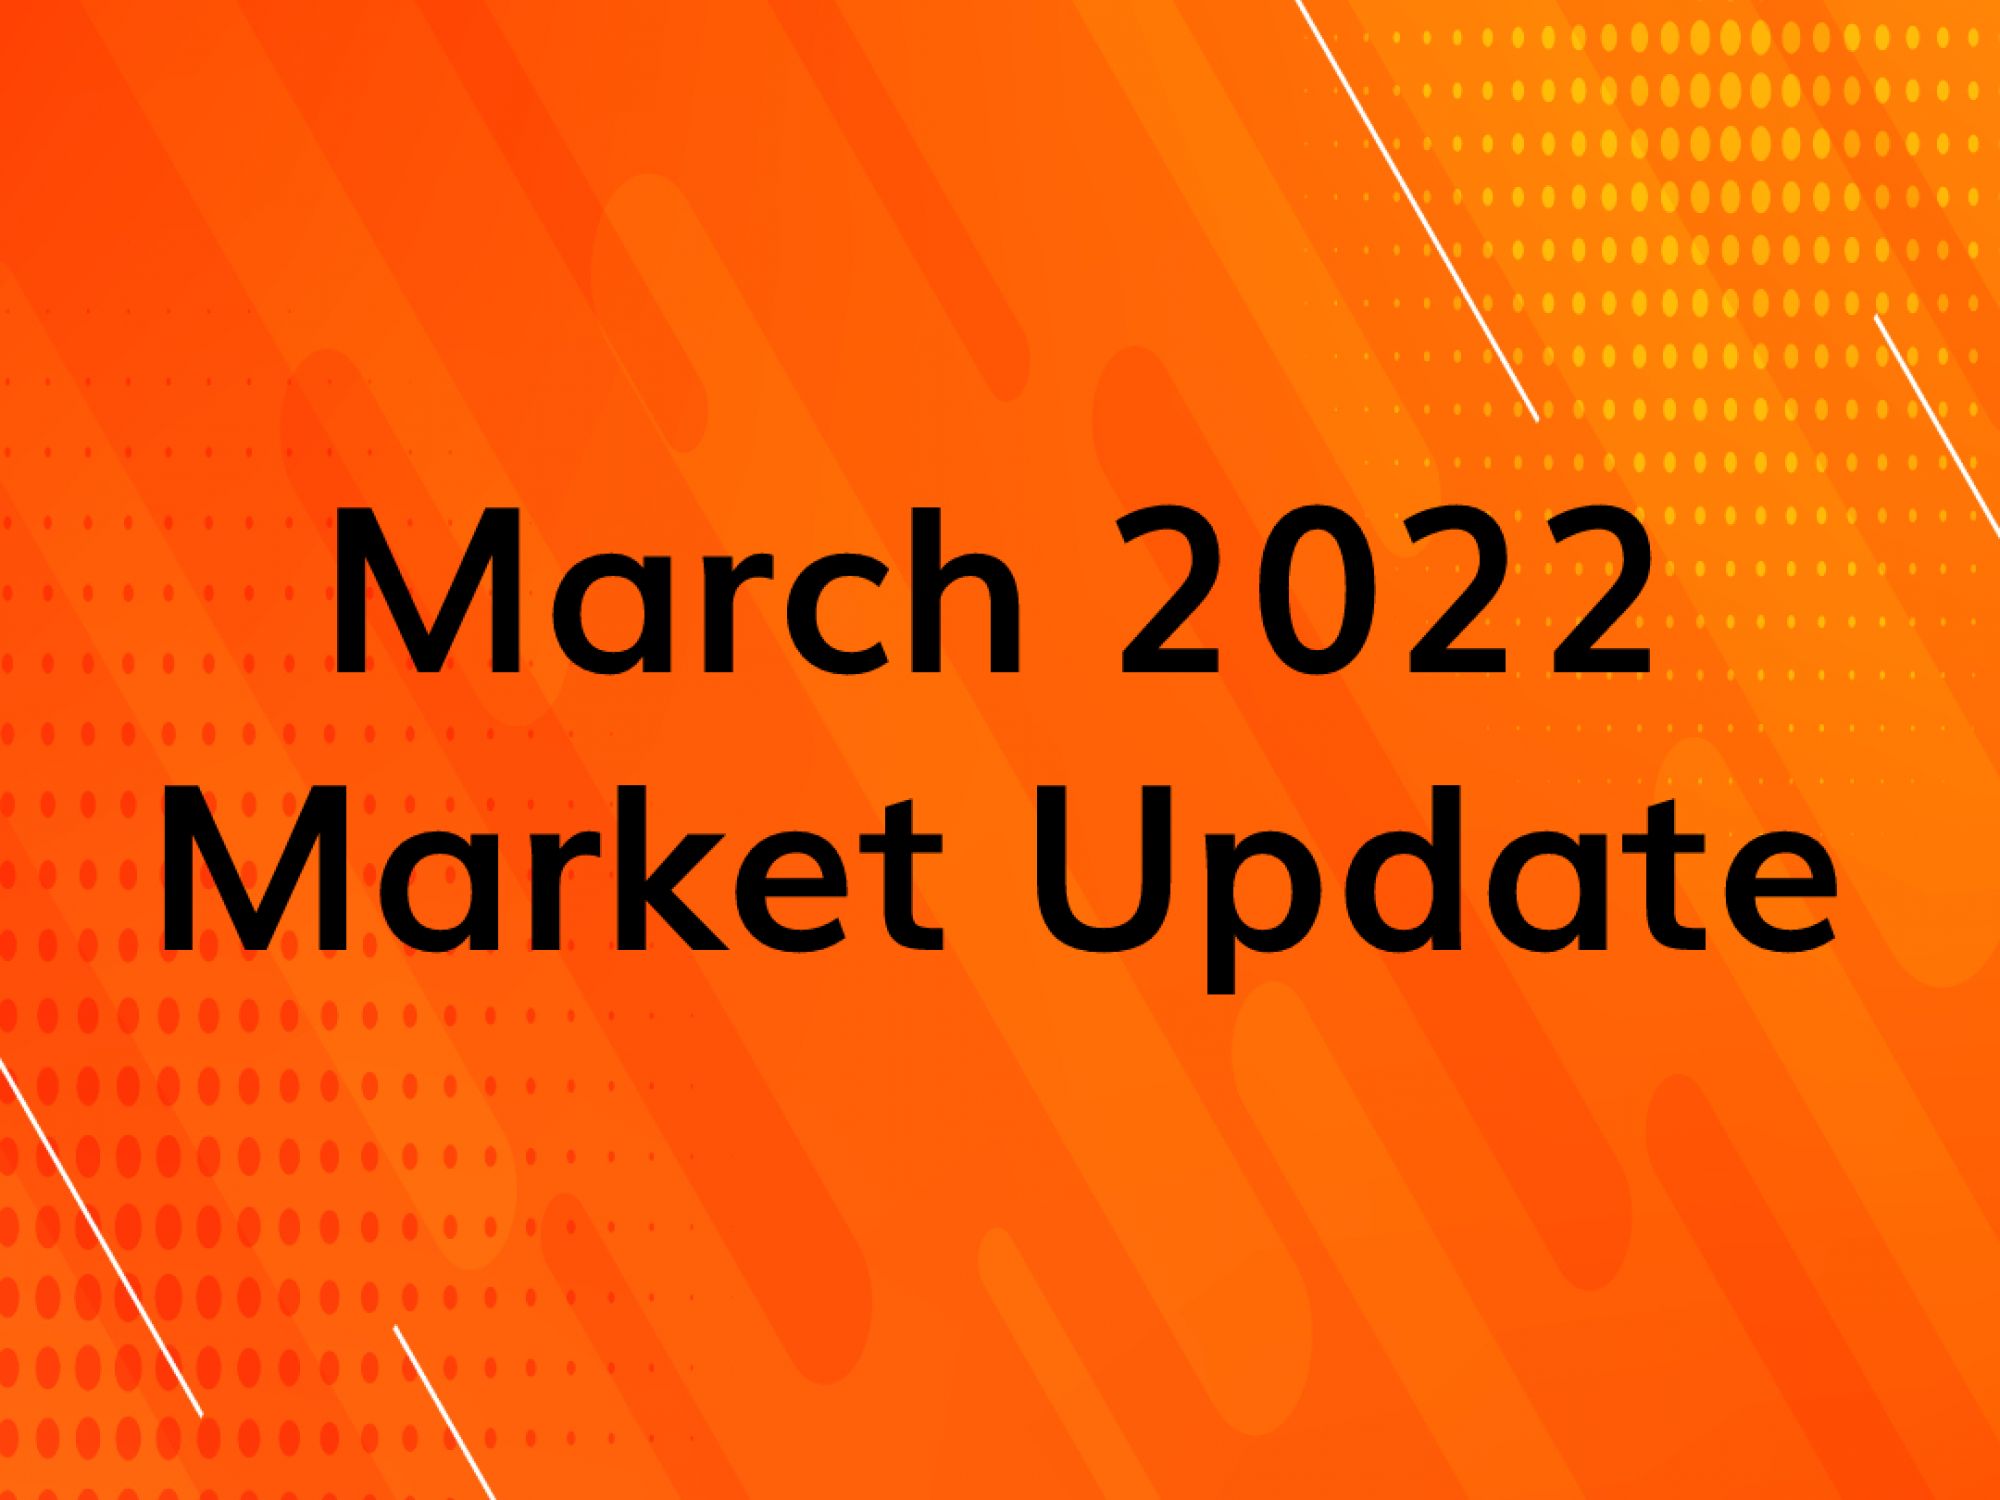 Automotive News - March 2022 Market Update